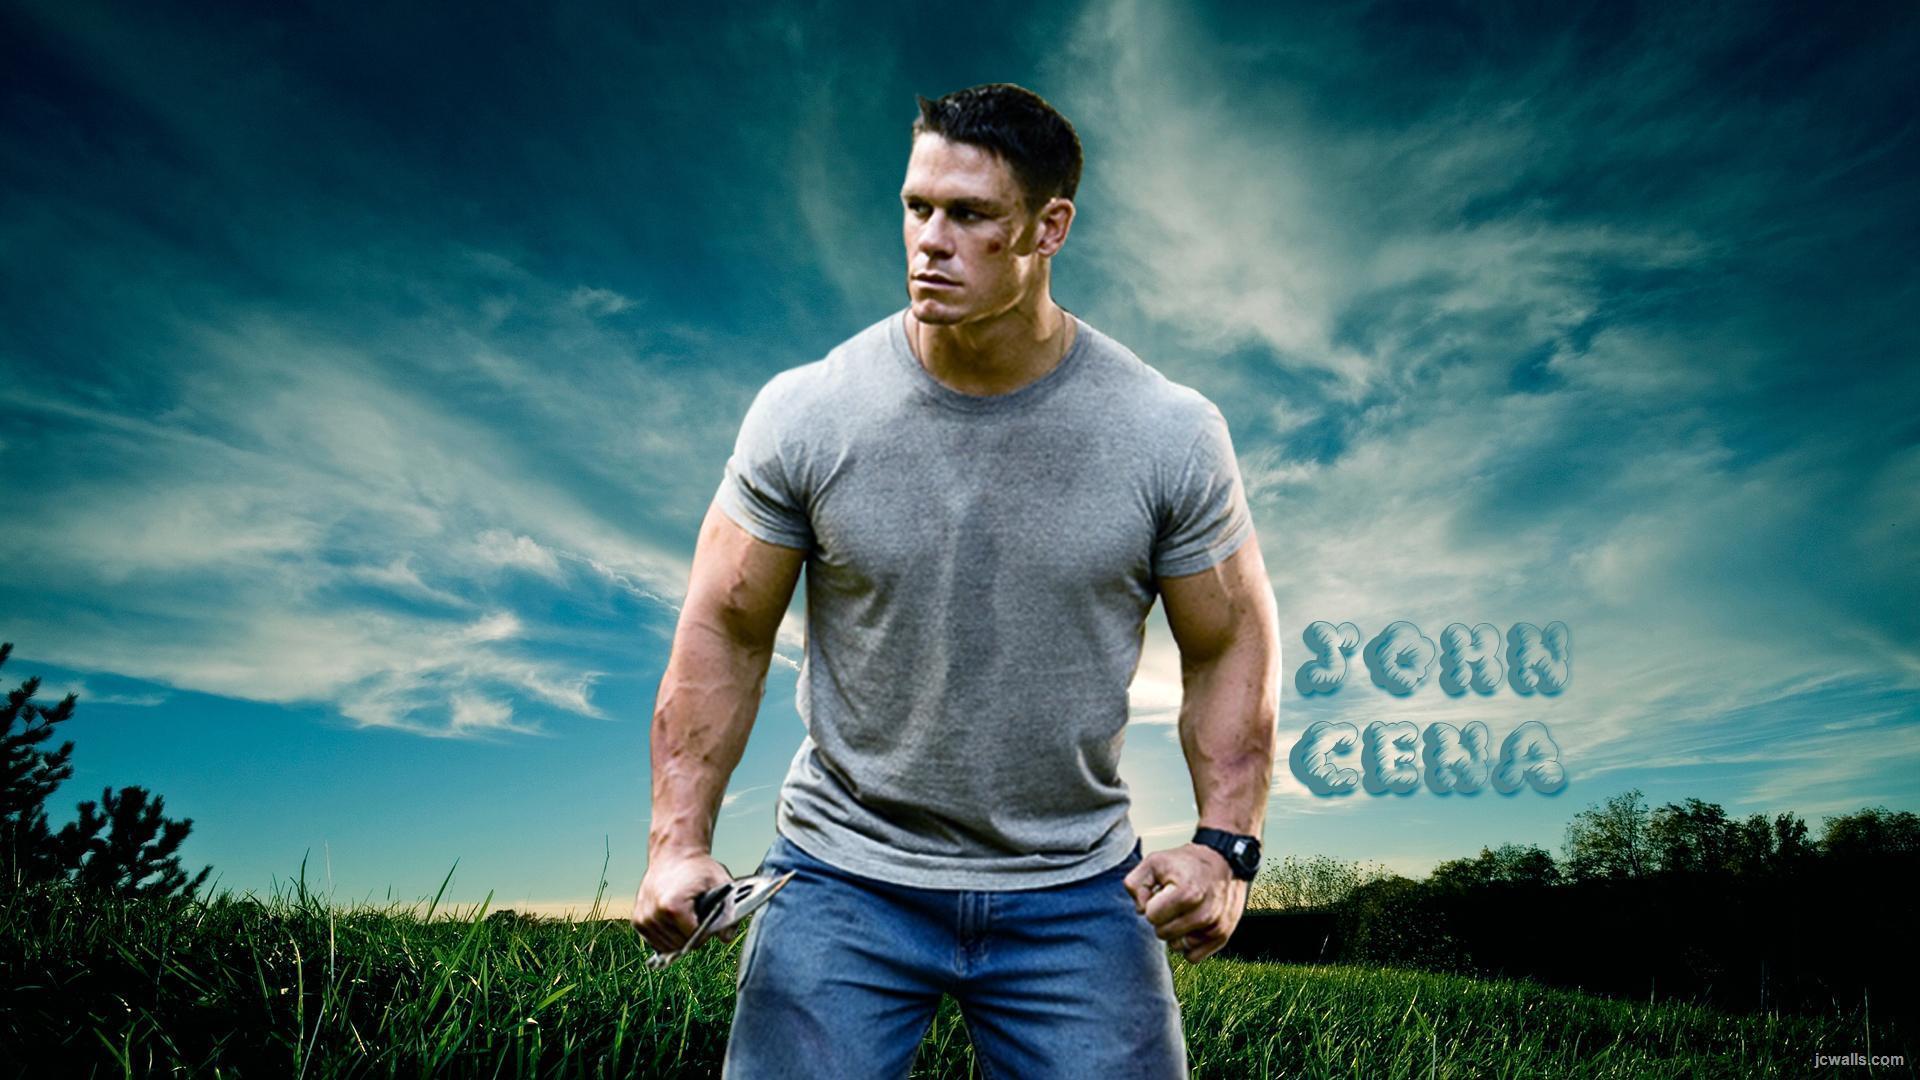 John Cena HD Wallpapers And Image 2015